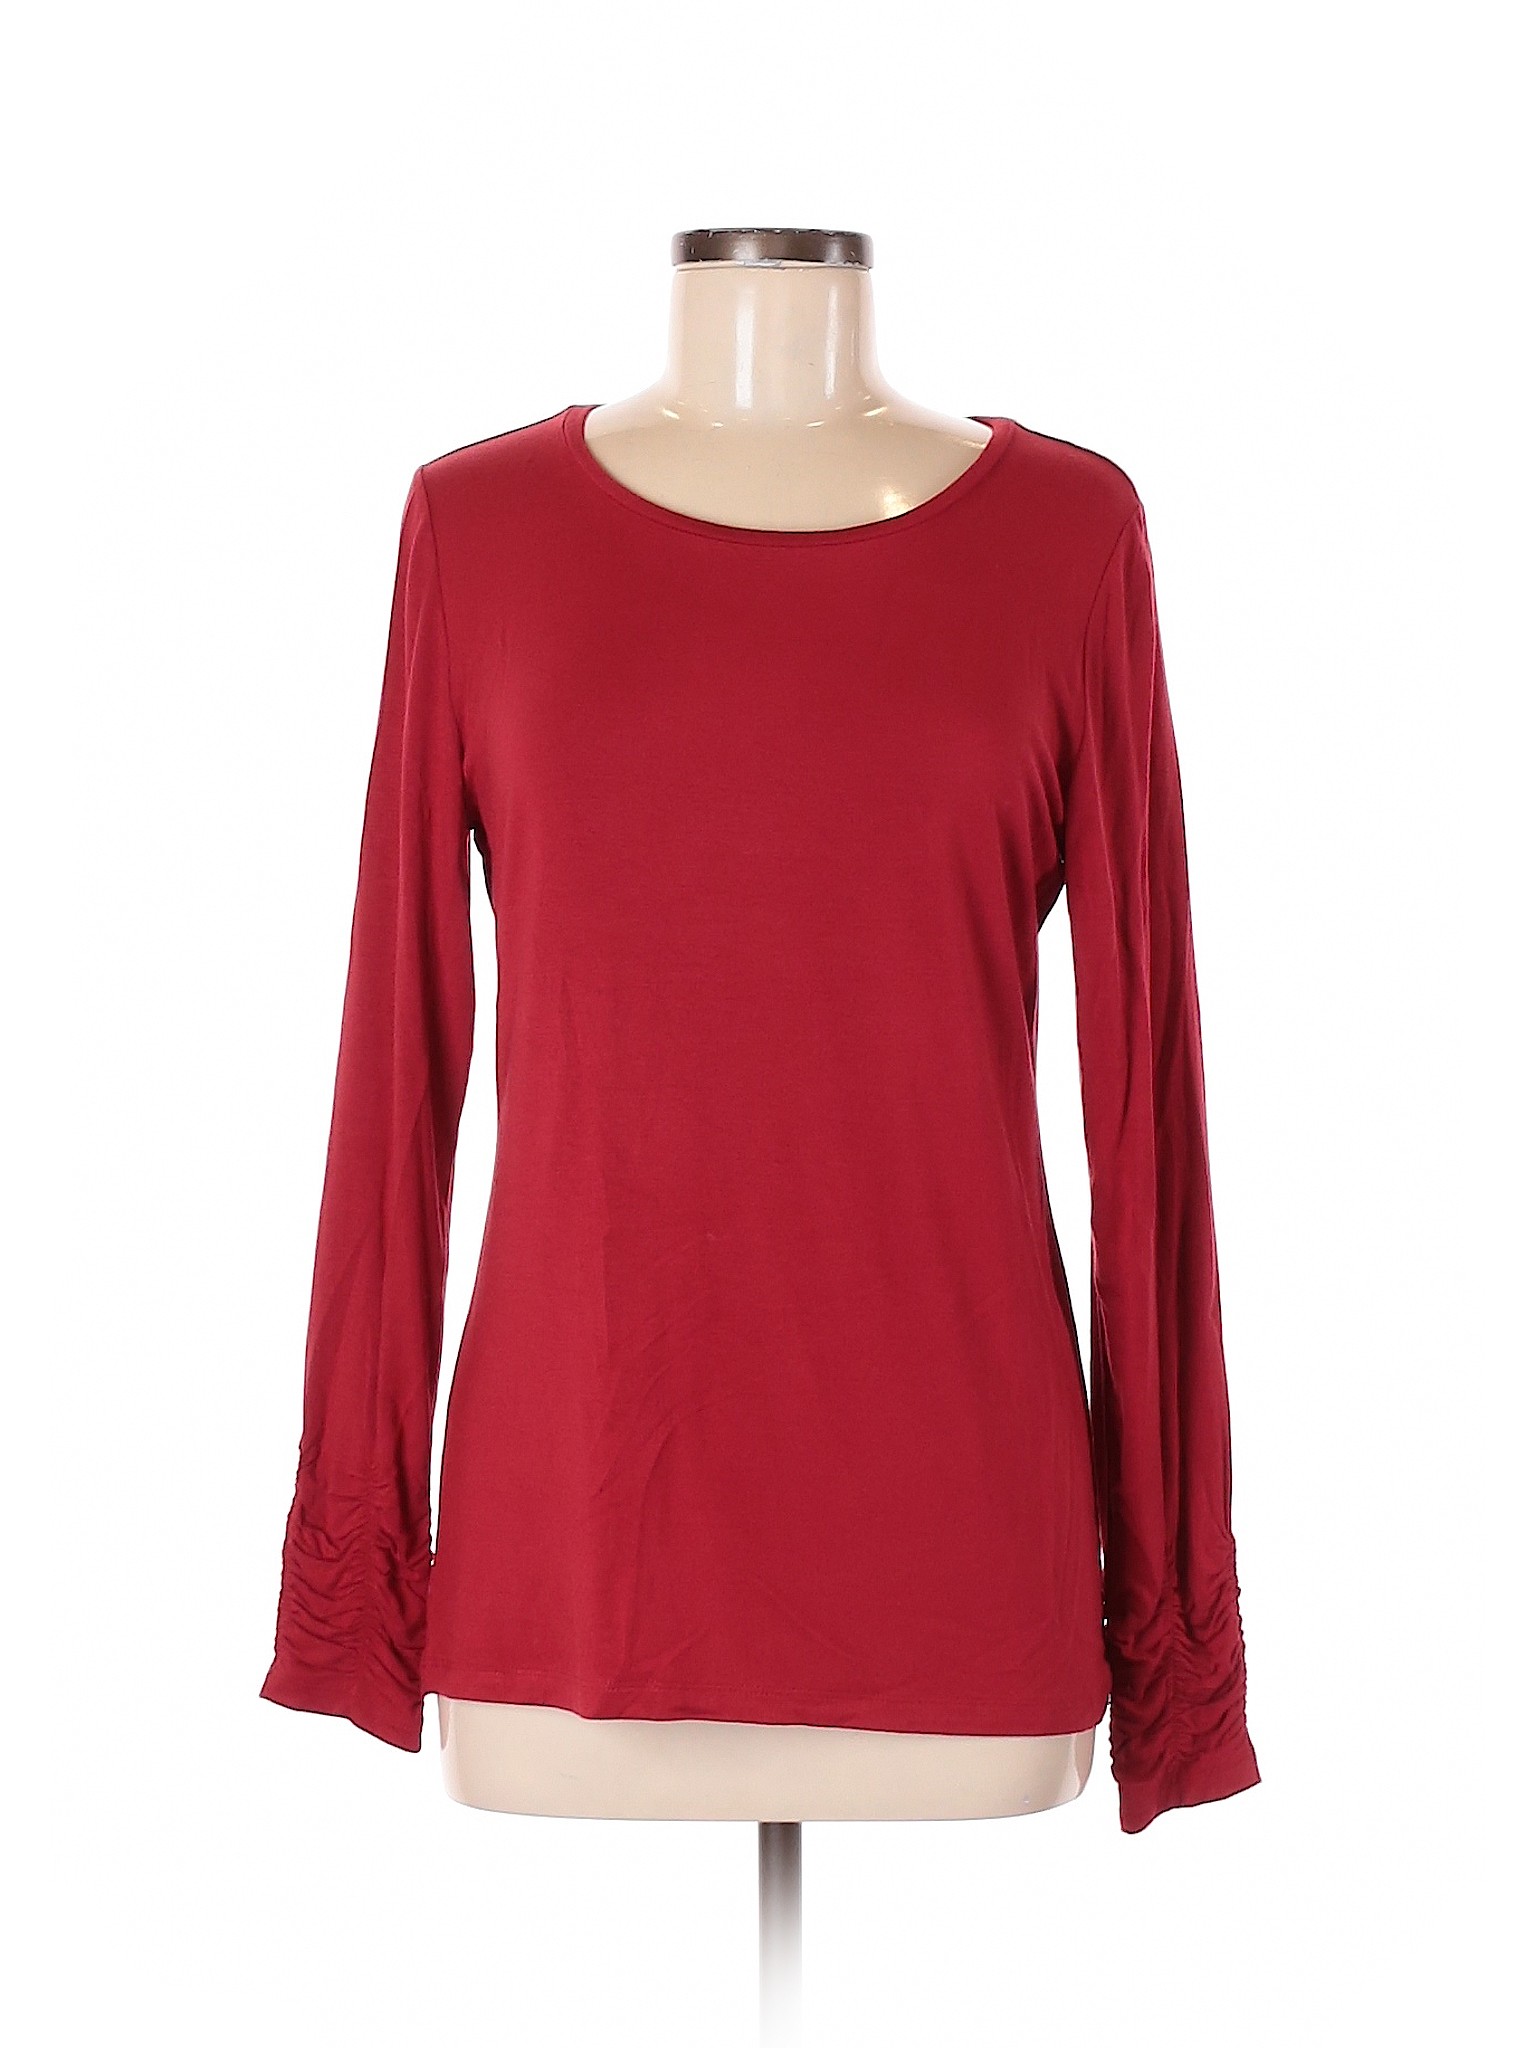 Alfani Women Red Long Sleeve T-Shirt M | eBay